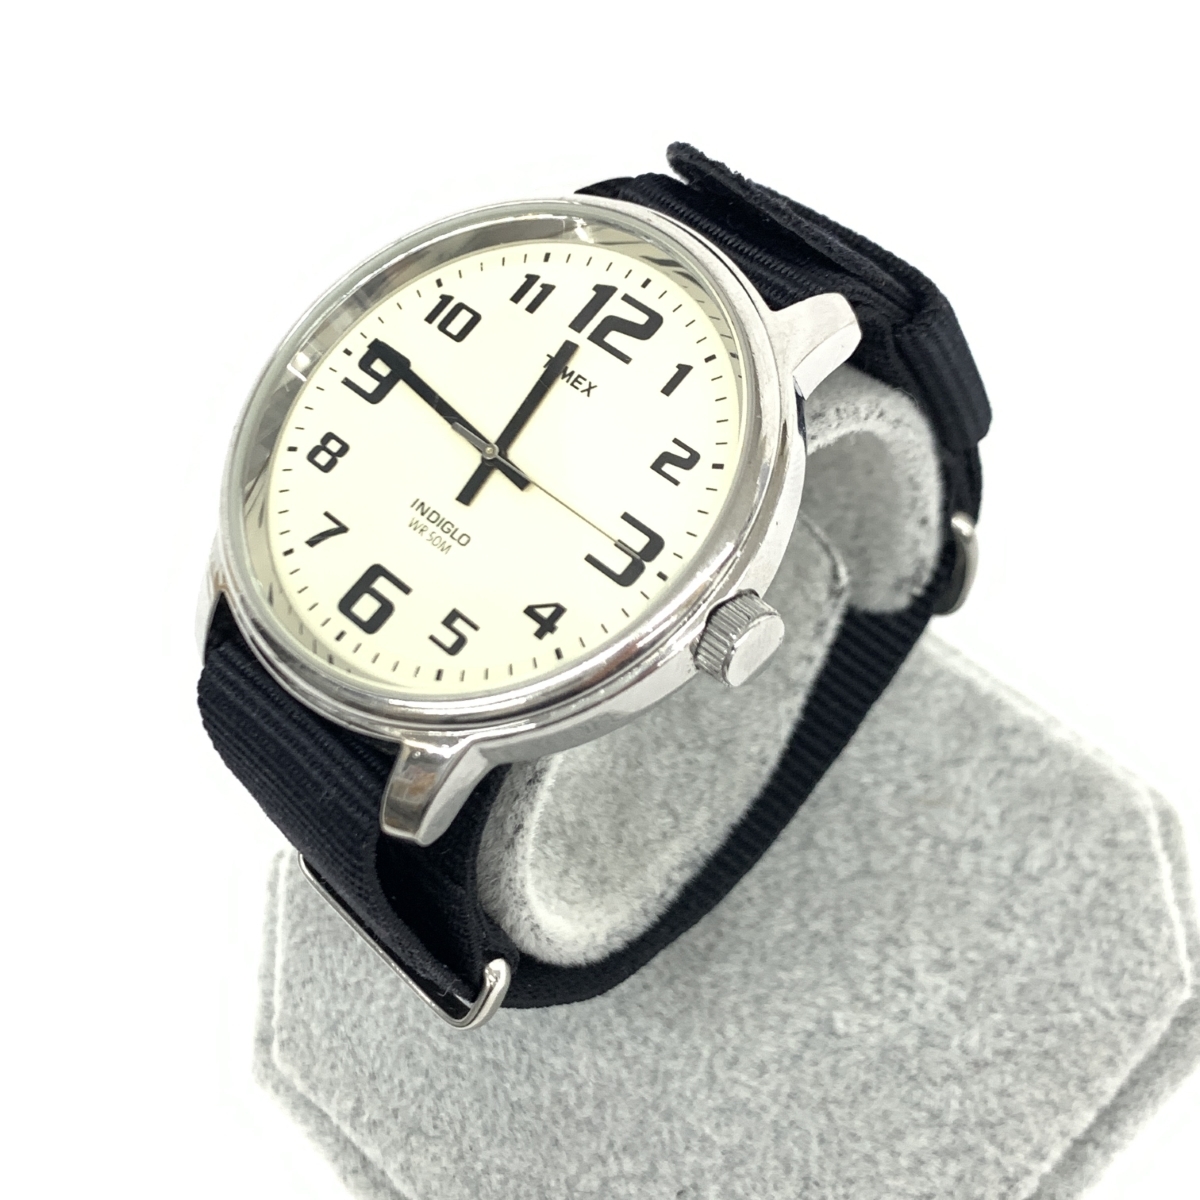 ◆TIMEX タイメックス ビッグイージーリーダー 腕時計 クォーツ◆T28201 ブラック SS×ナイロン メンズ ウォッチ watch_画像1